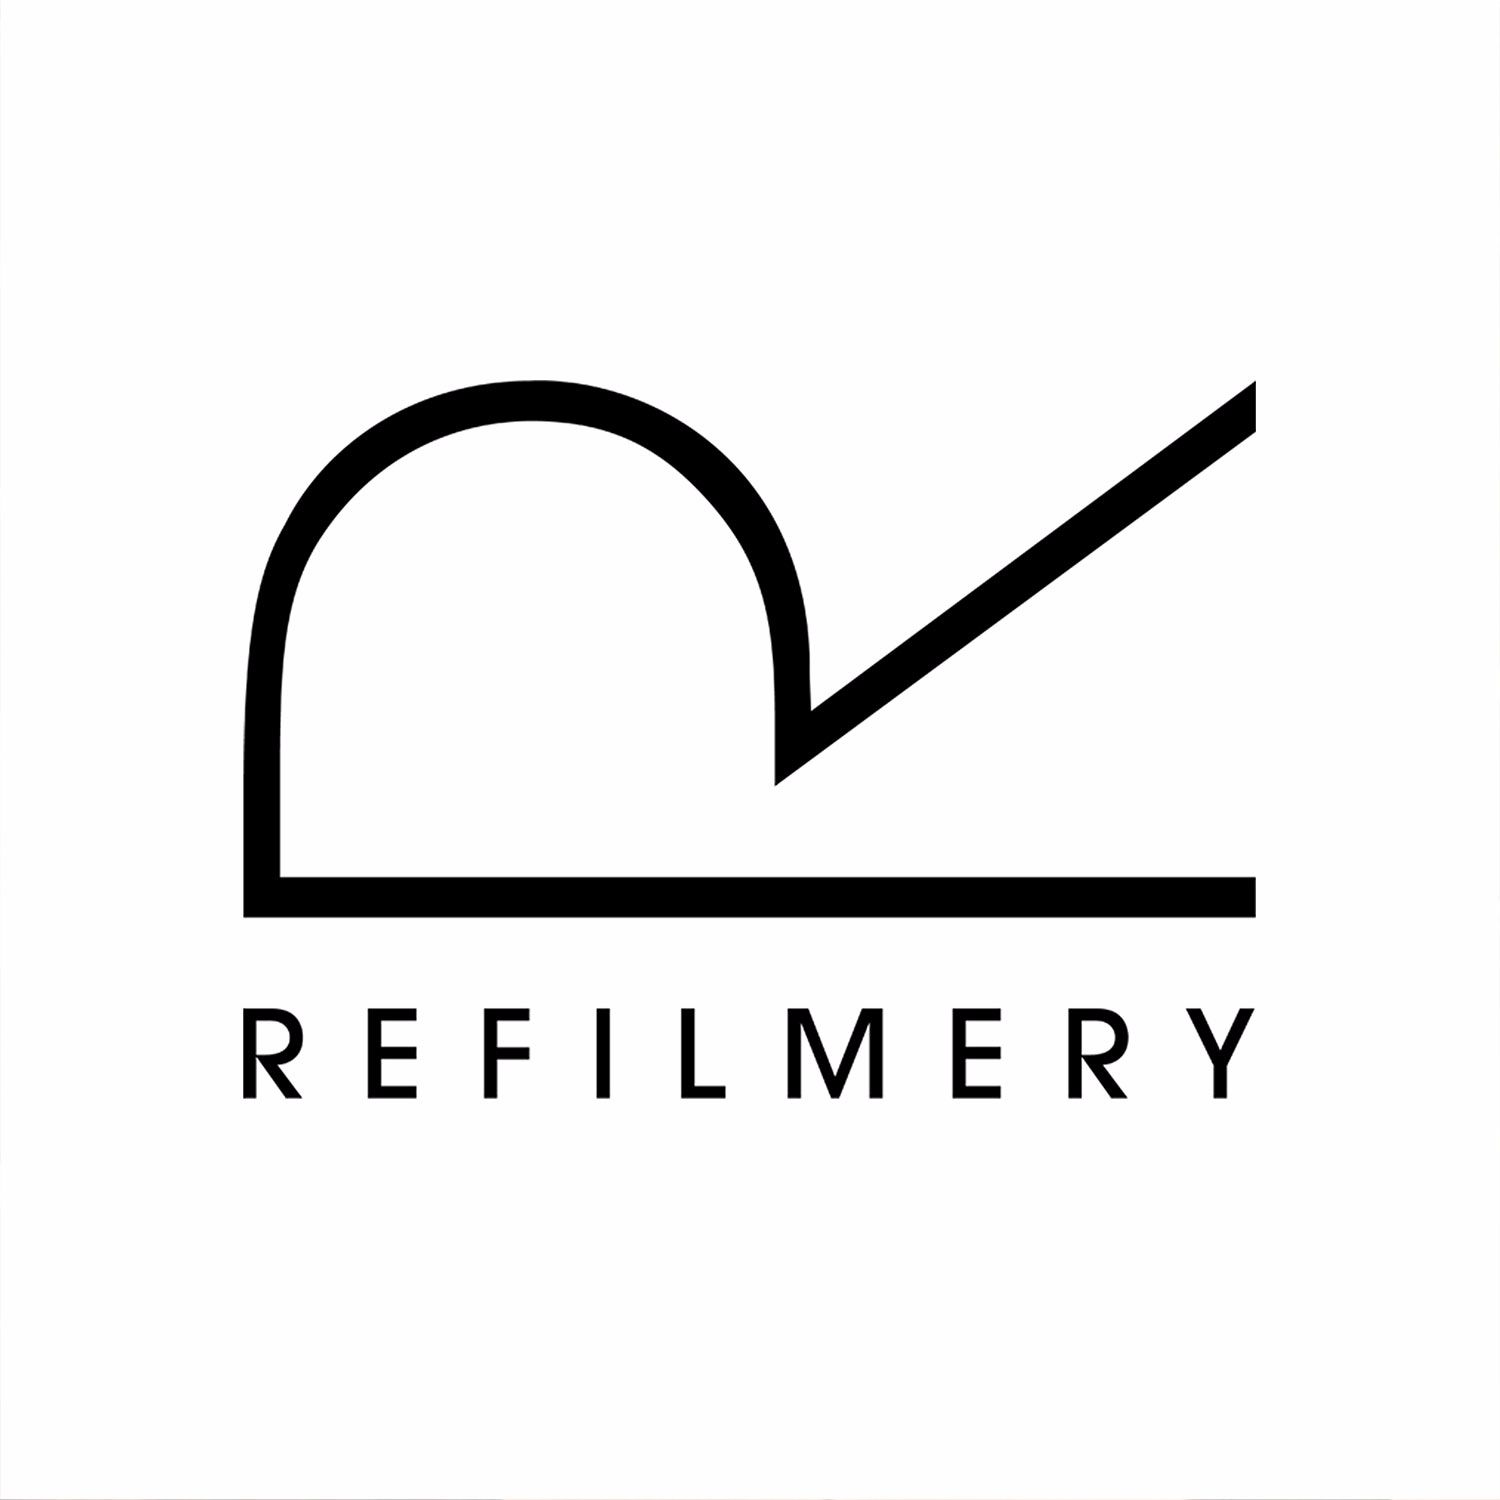 Refilmery Series | Creative Leaders of Films, Brands, and Video